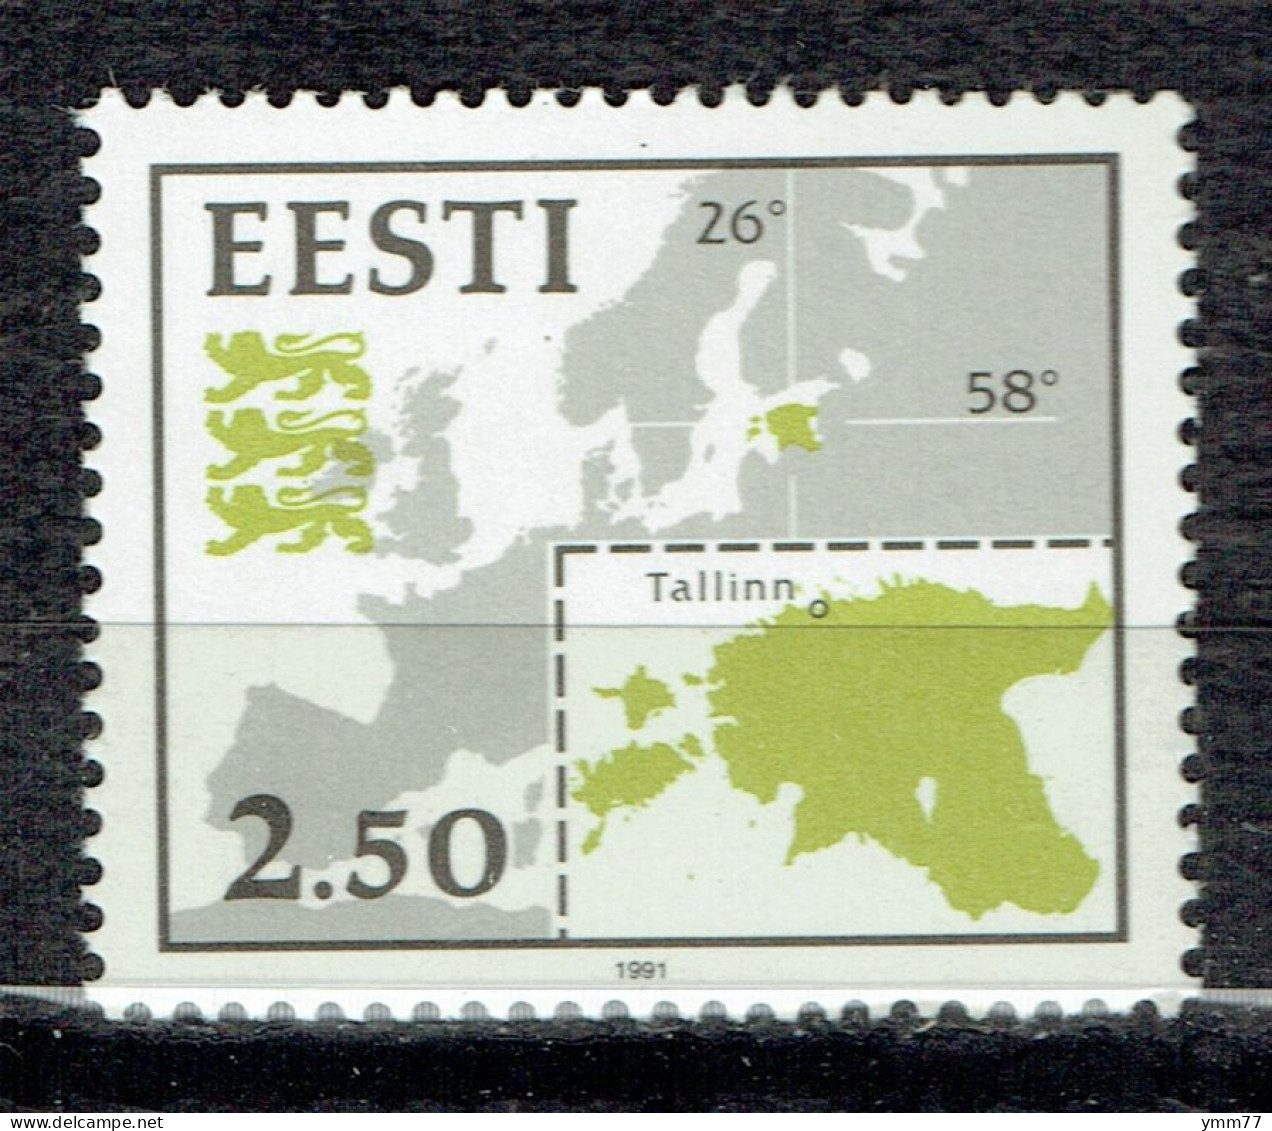 Symboles Nationaux : Carte De L'Europe Et De L'Estonie - Estonia